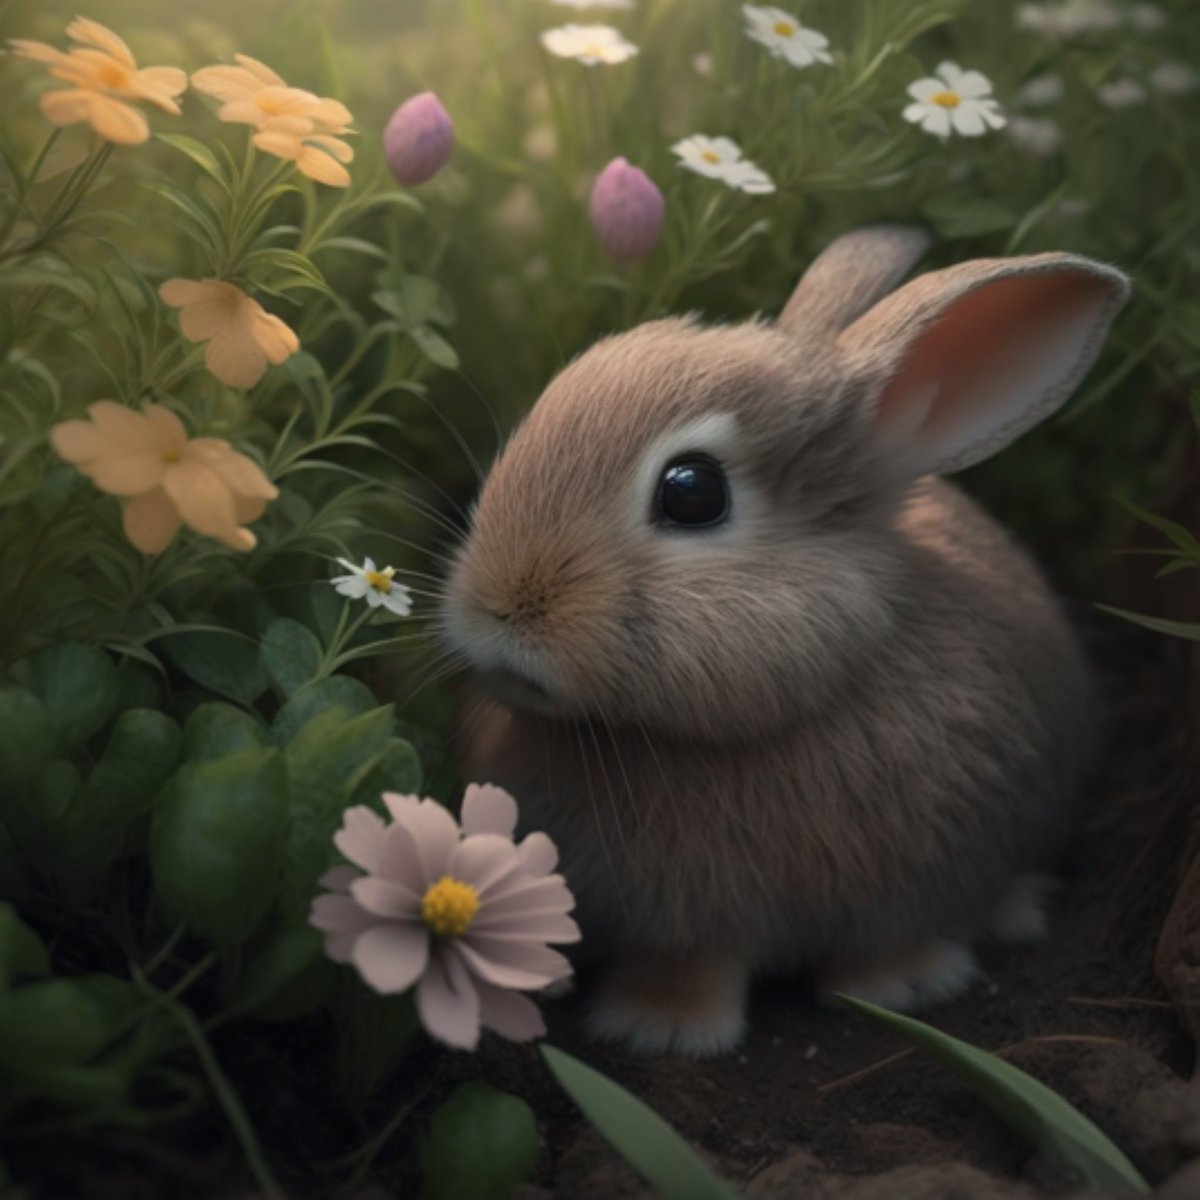 redbubble.com/people/Buleman…
#bunnylove
#rabbitsofinstagram
#cutebunnies
#bunnylife
#rabbitstagram
#bunnyworldwide
#houserabbit
#bunnygram
#bunnyhugs
#rabbitobsessed
#bunnyfun
#rabbitfriends
#lapinlove
#bunnyadventures
#bunnyfam